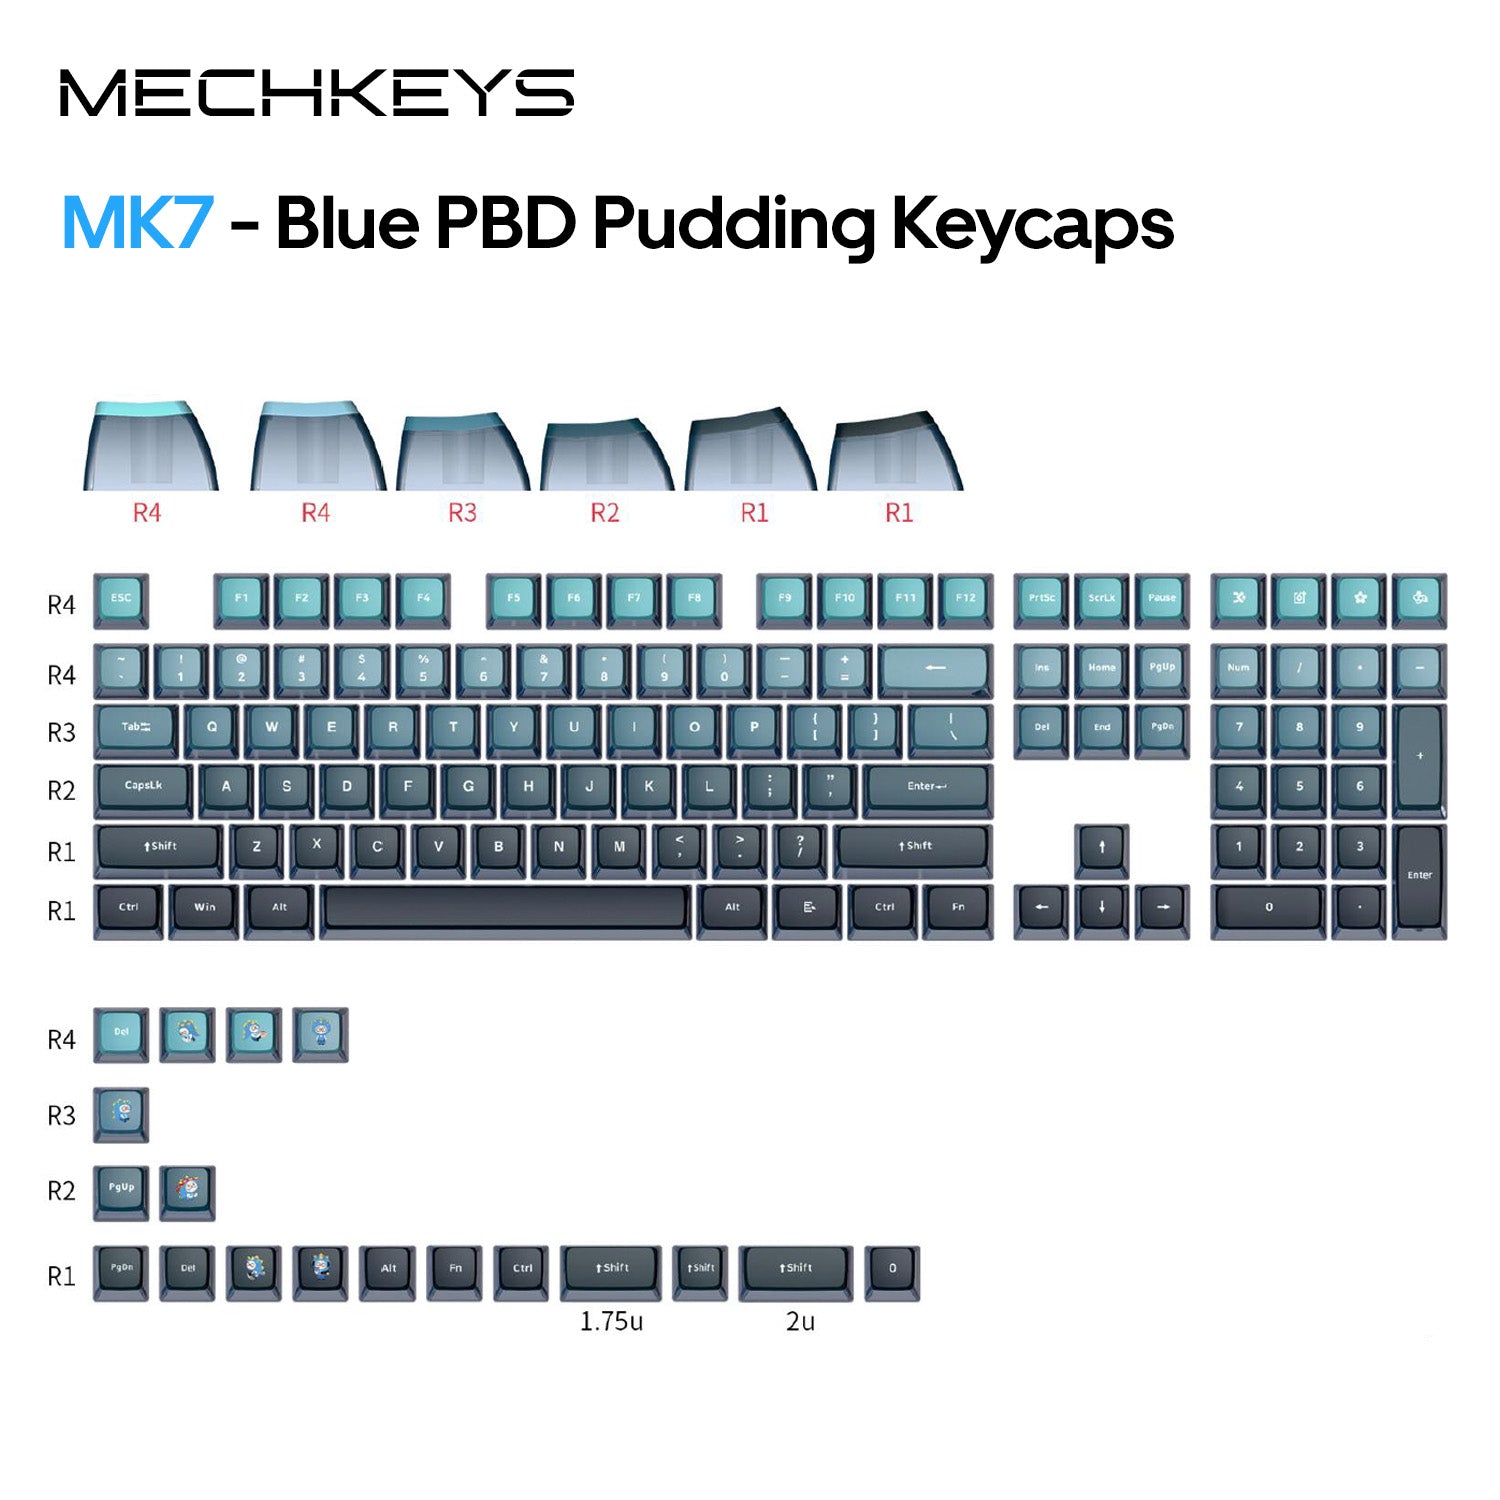 OVERCLOCK MECHKEYS Blue PBT Pudding Keycaps